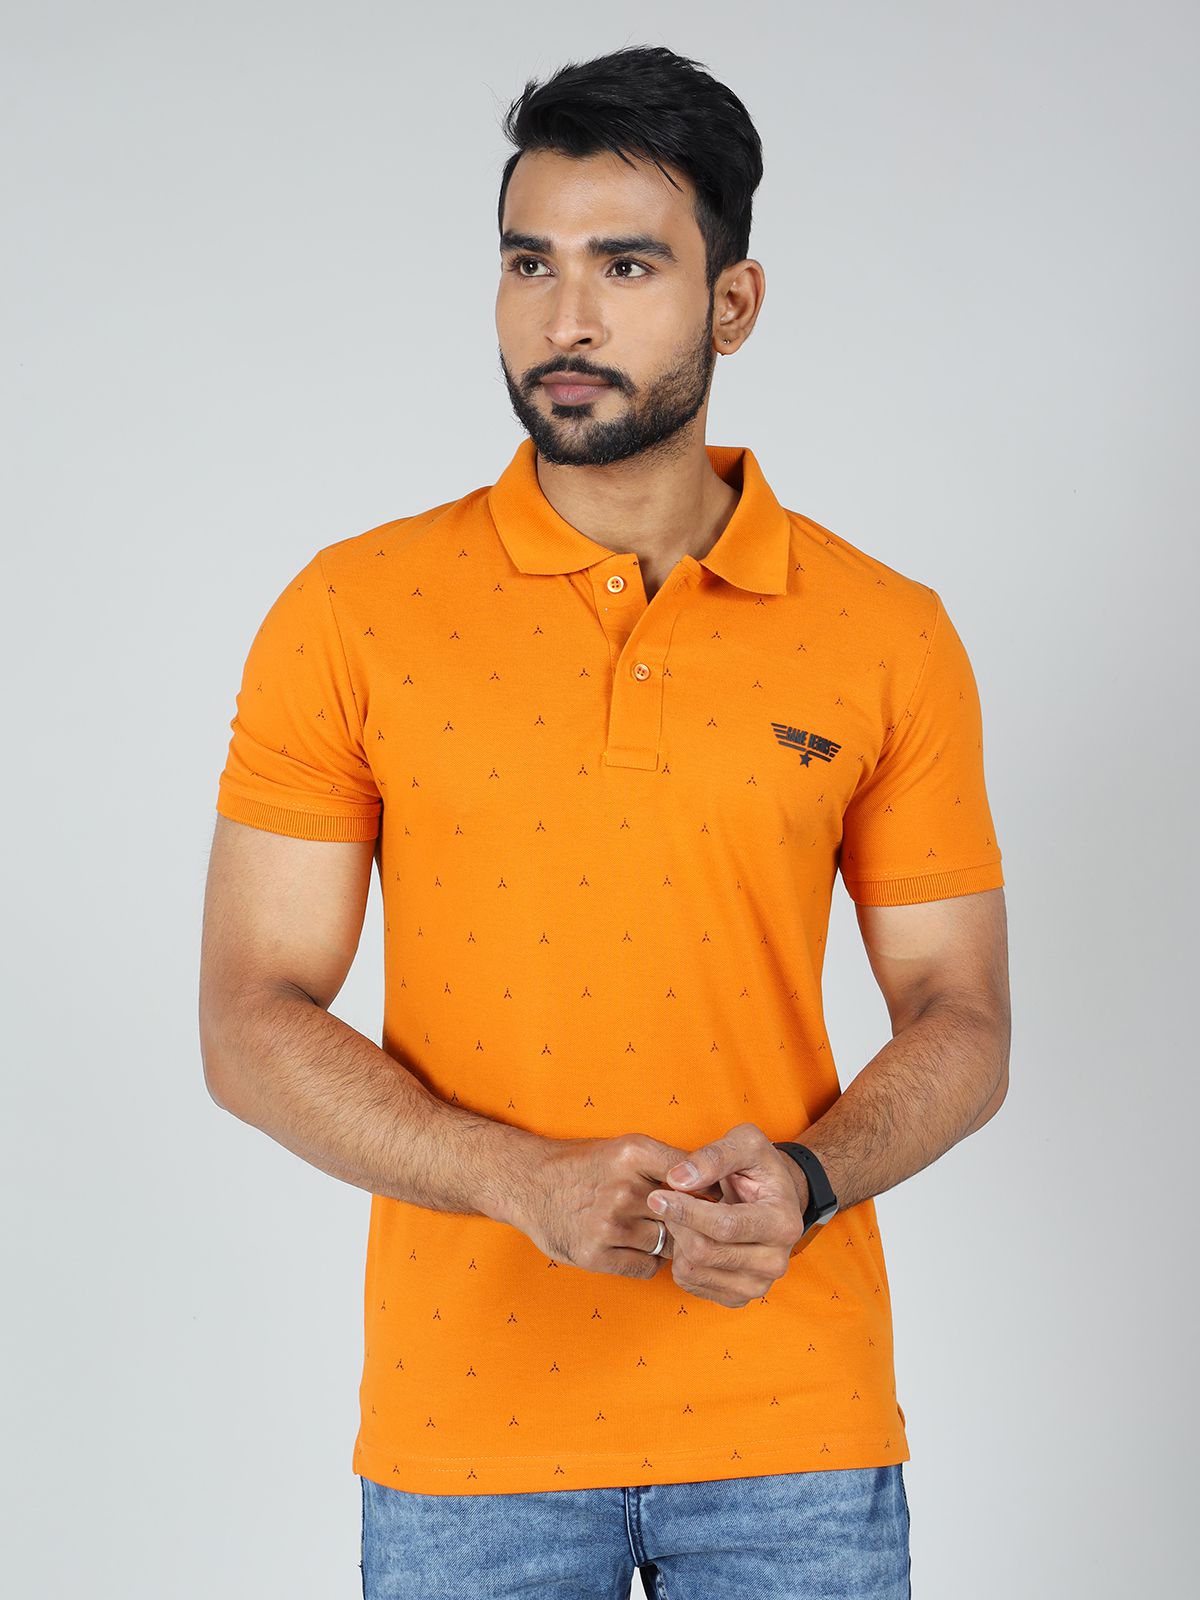     			GAME BEGINS Cotton Slim Fit Printed Half Sleeves Men's Polo T Shirt - Orange ( Pack of 1 )